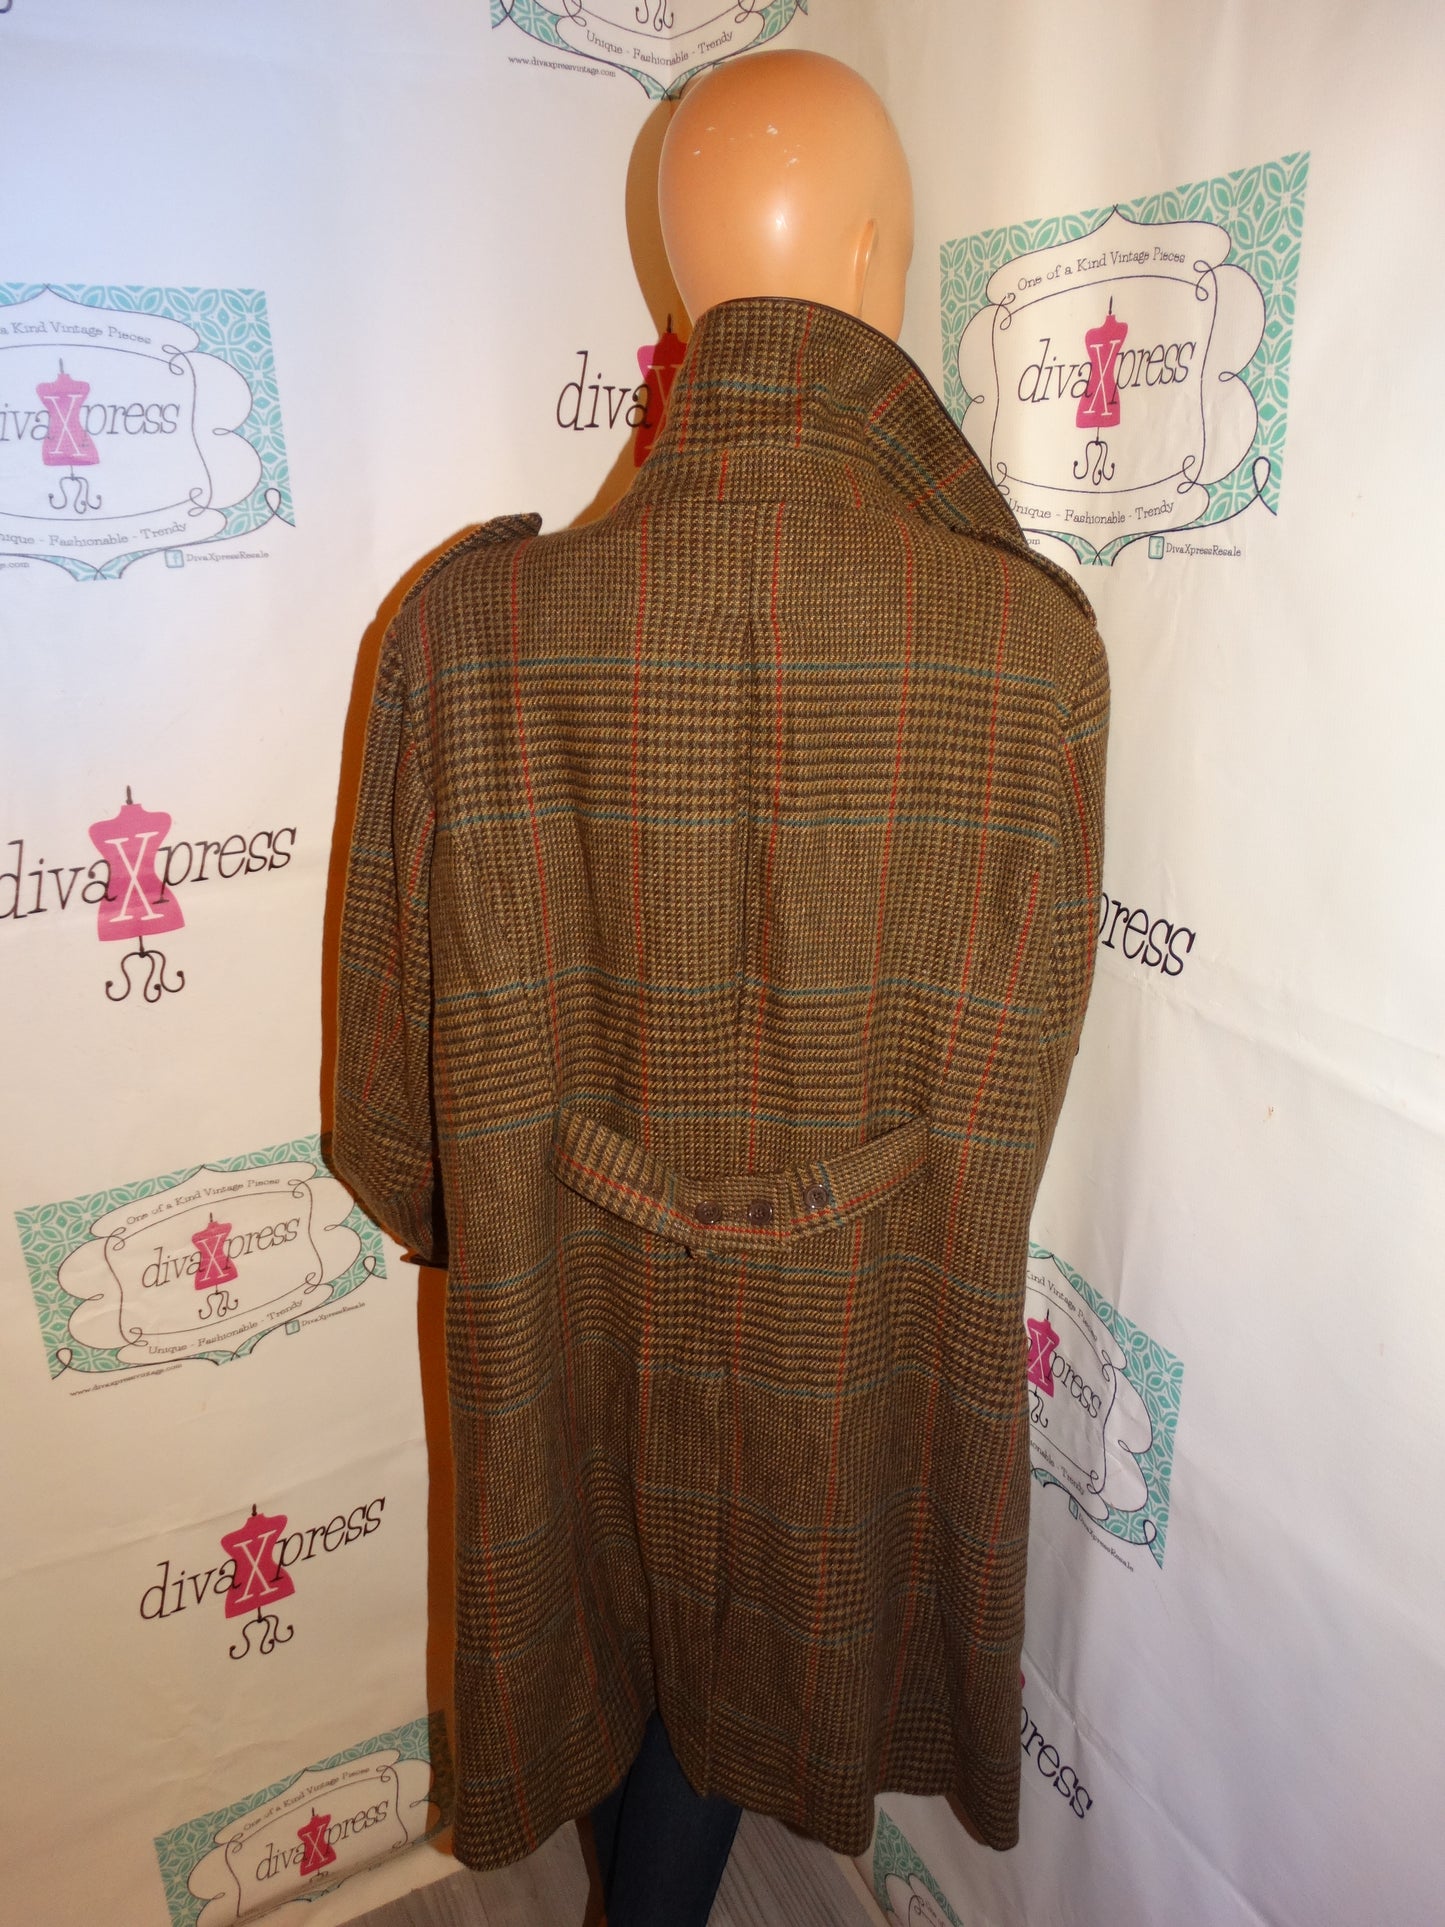 Vintage Jessica London Brown Plaid Jacket Size 2x